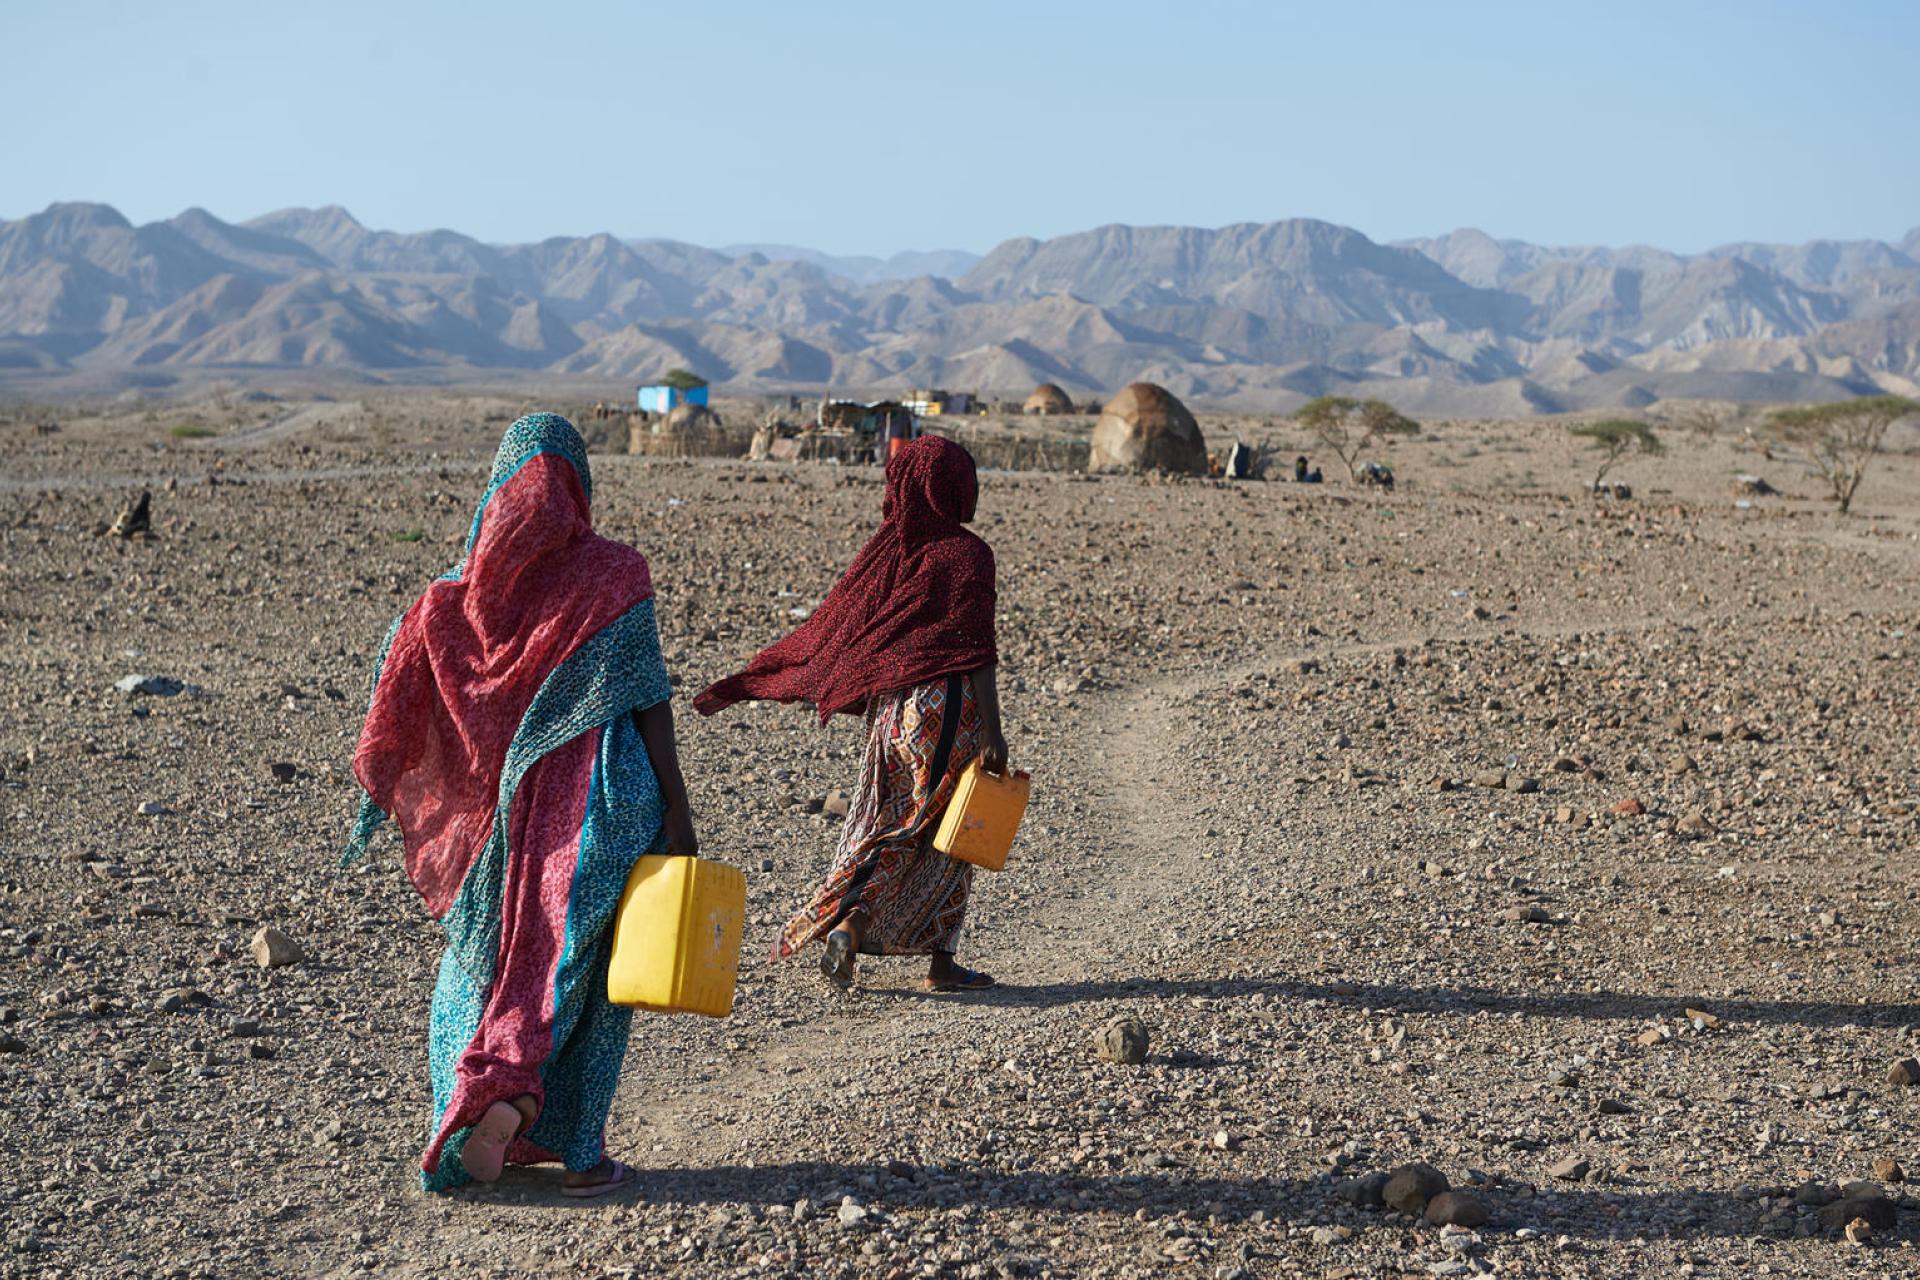 Global water crisis effects women disproportionately. Image Credits: UNICEF / Noorani